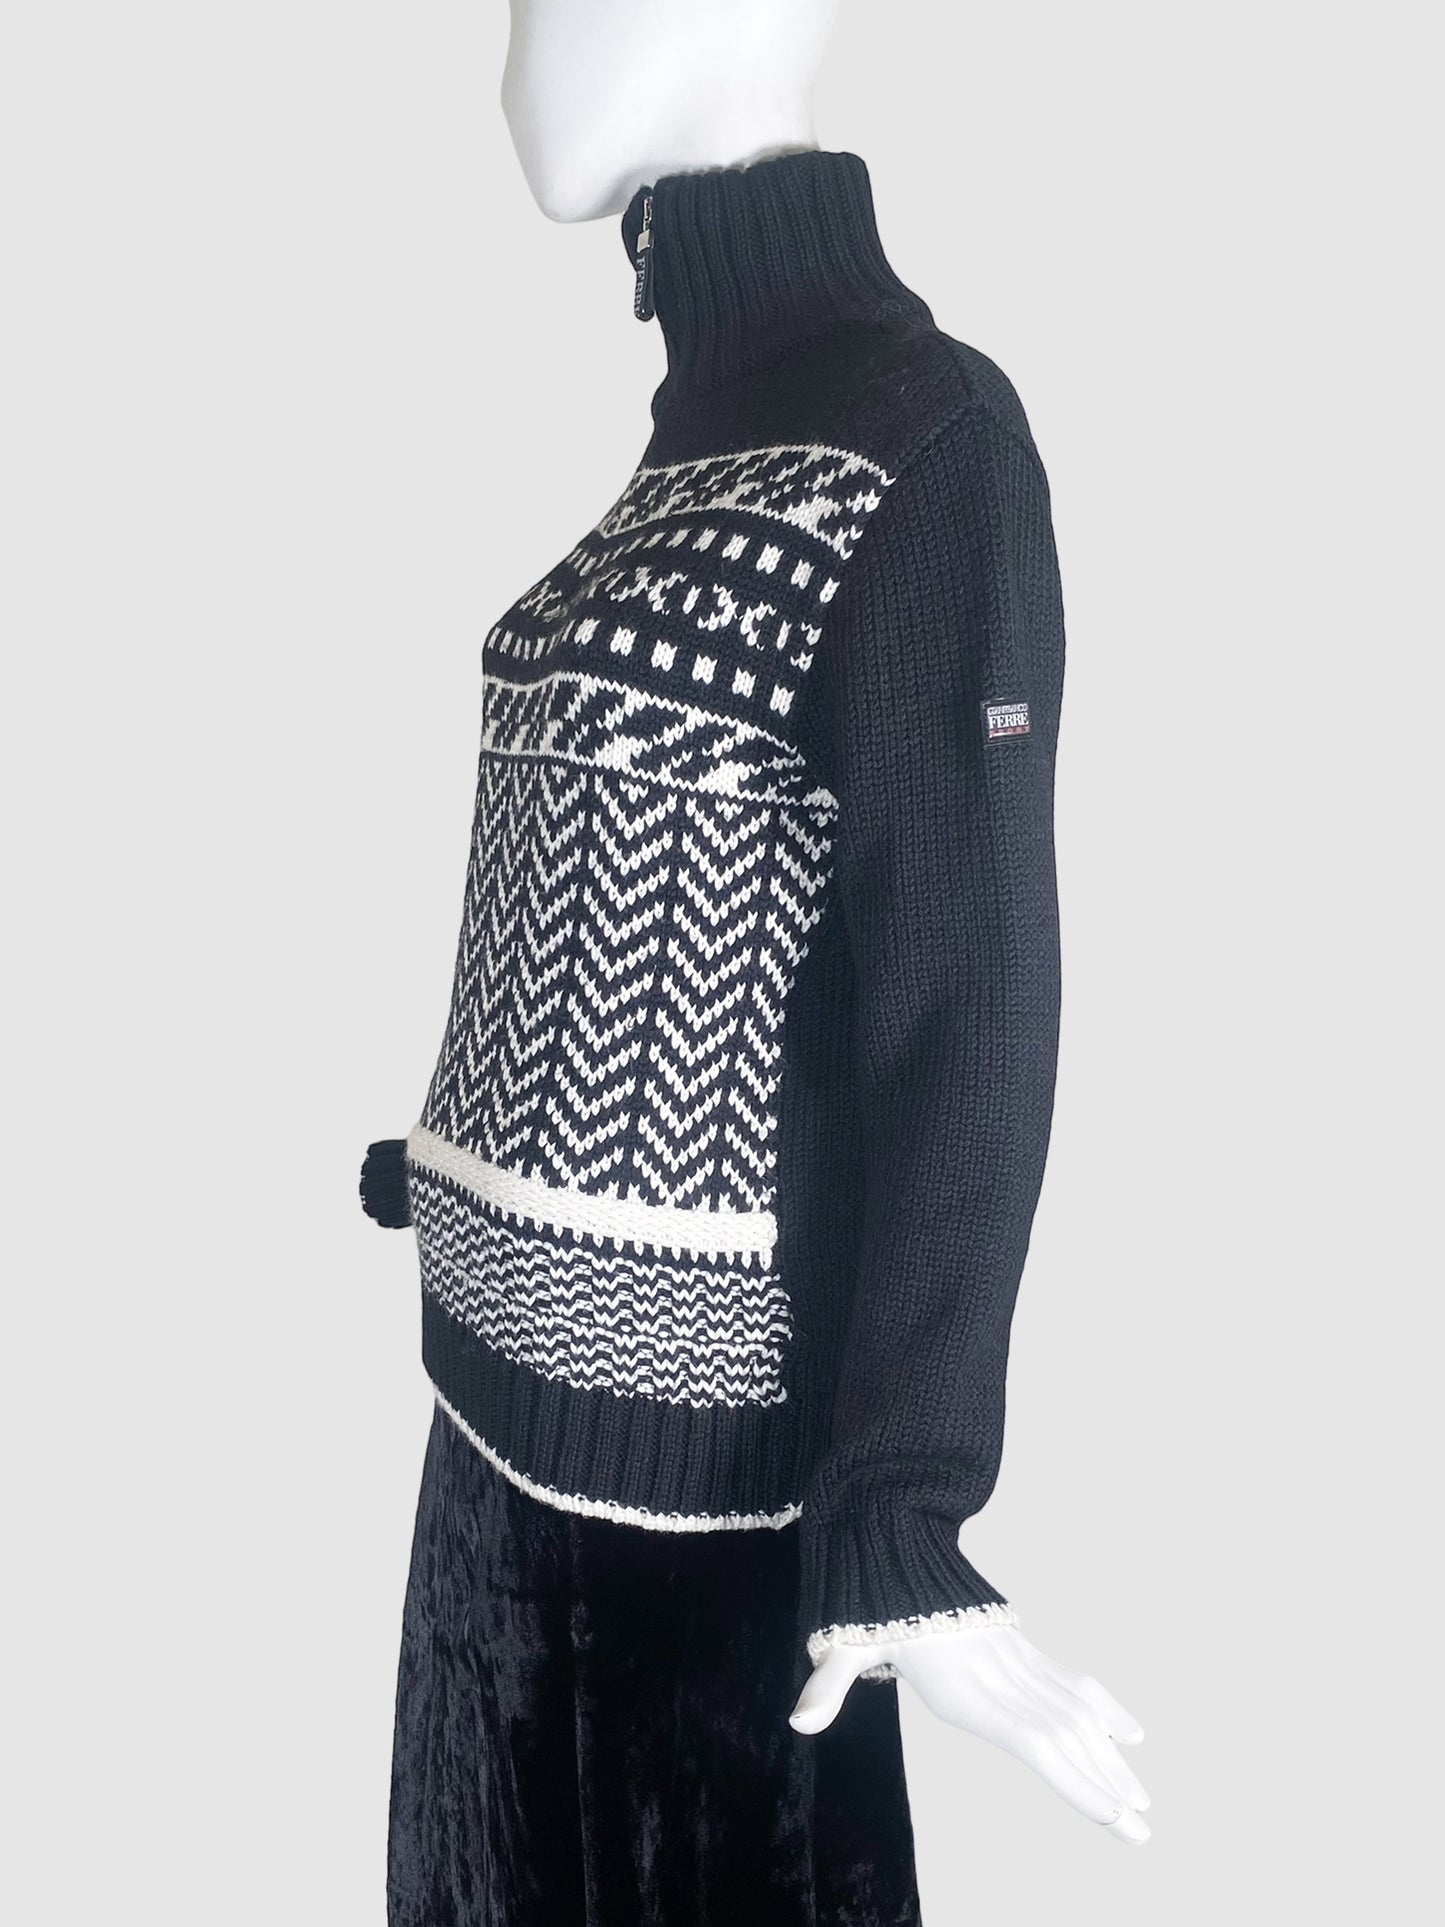 Gianfranco Ferre Jacquard Knit Sweater - Size S/M